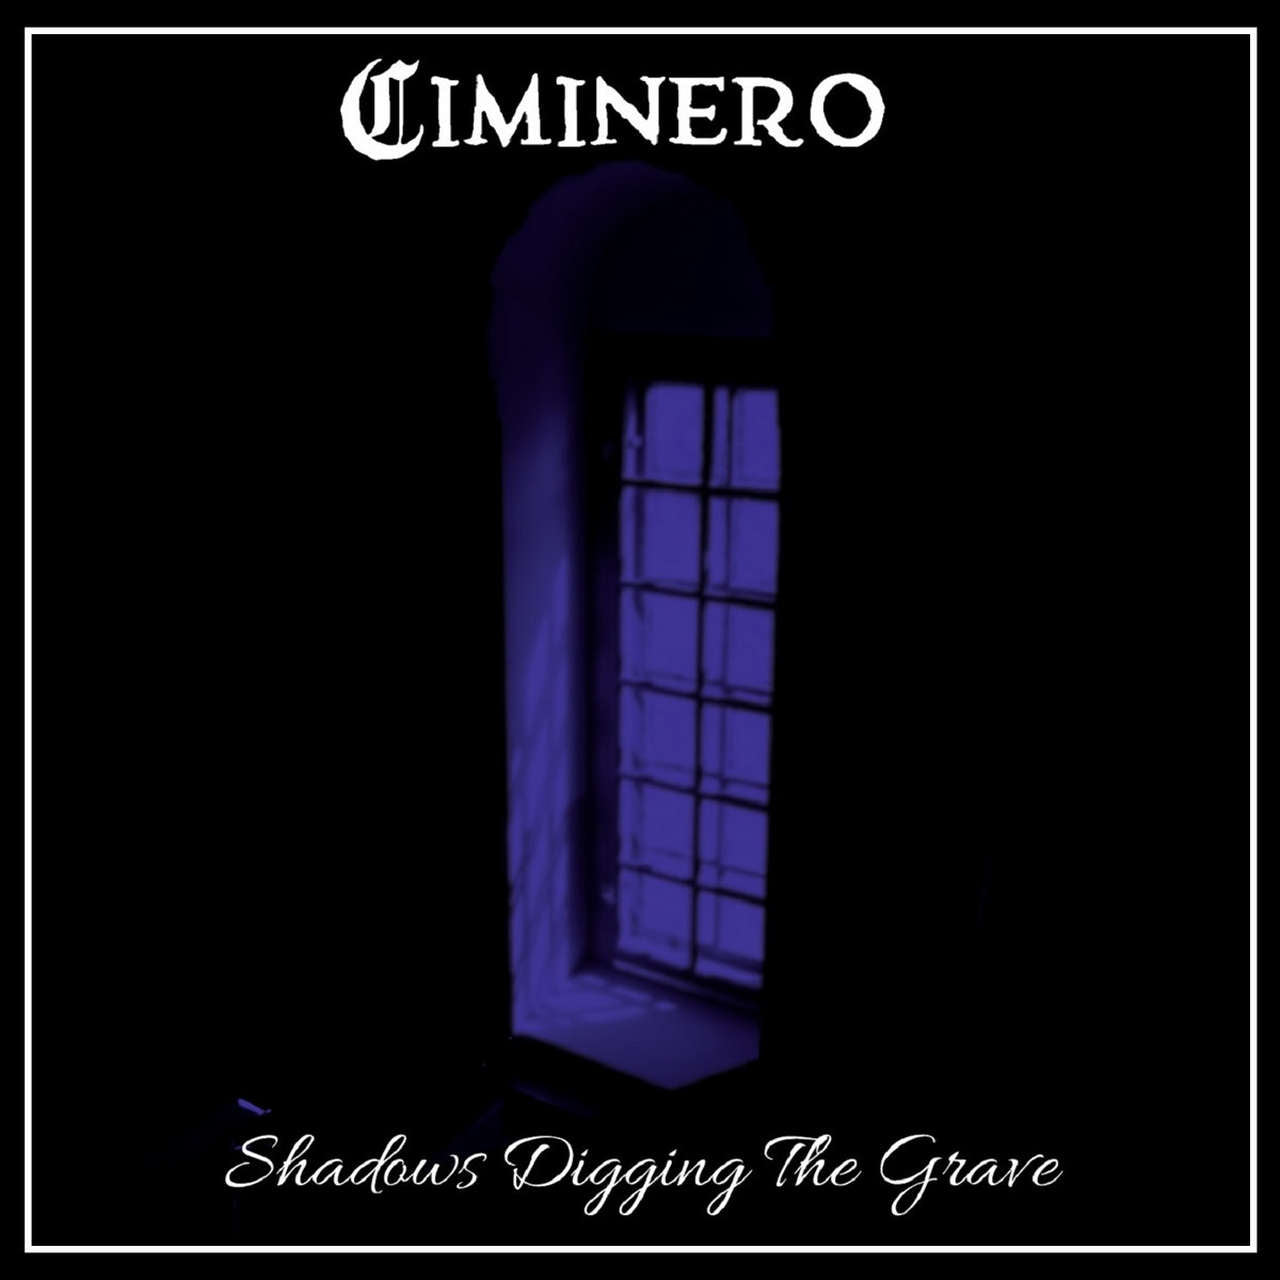 Ciminero - Shadows Digging the Grave (Digipak CD)